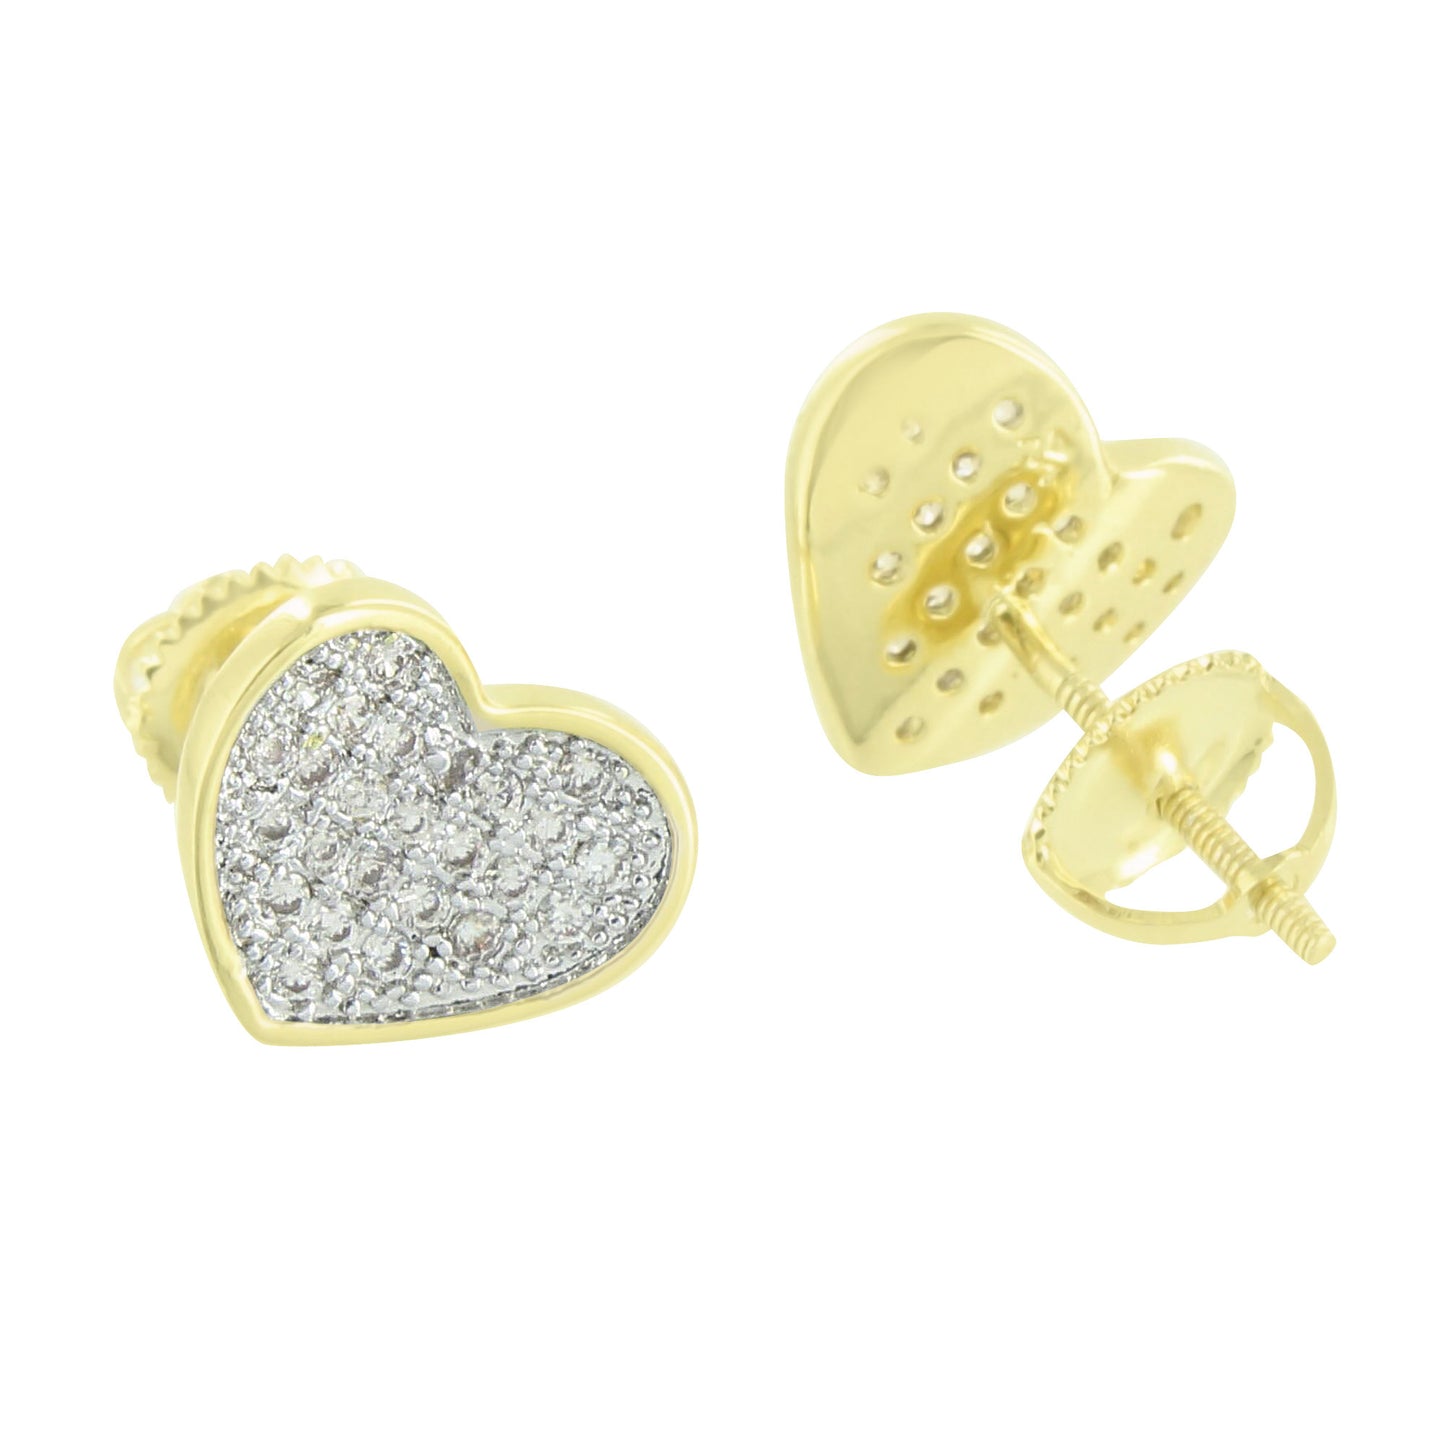 Heart Earrings 14k Gold Finish Screw Back Lab Diamonds